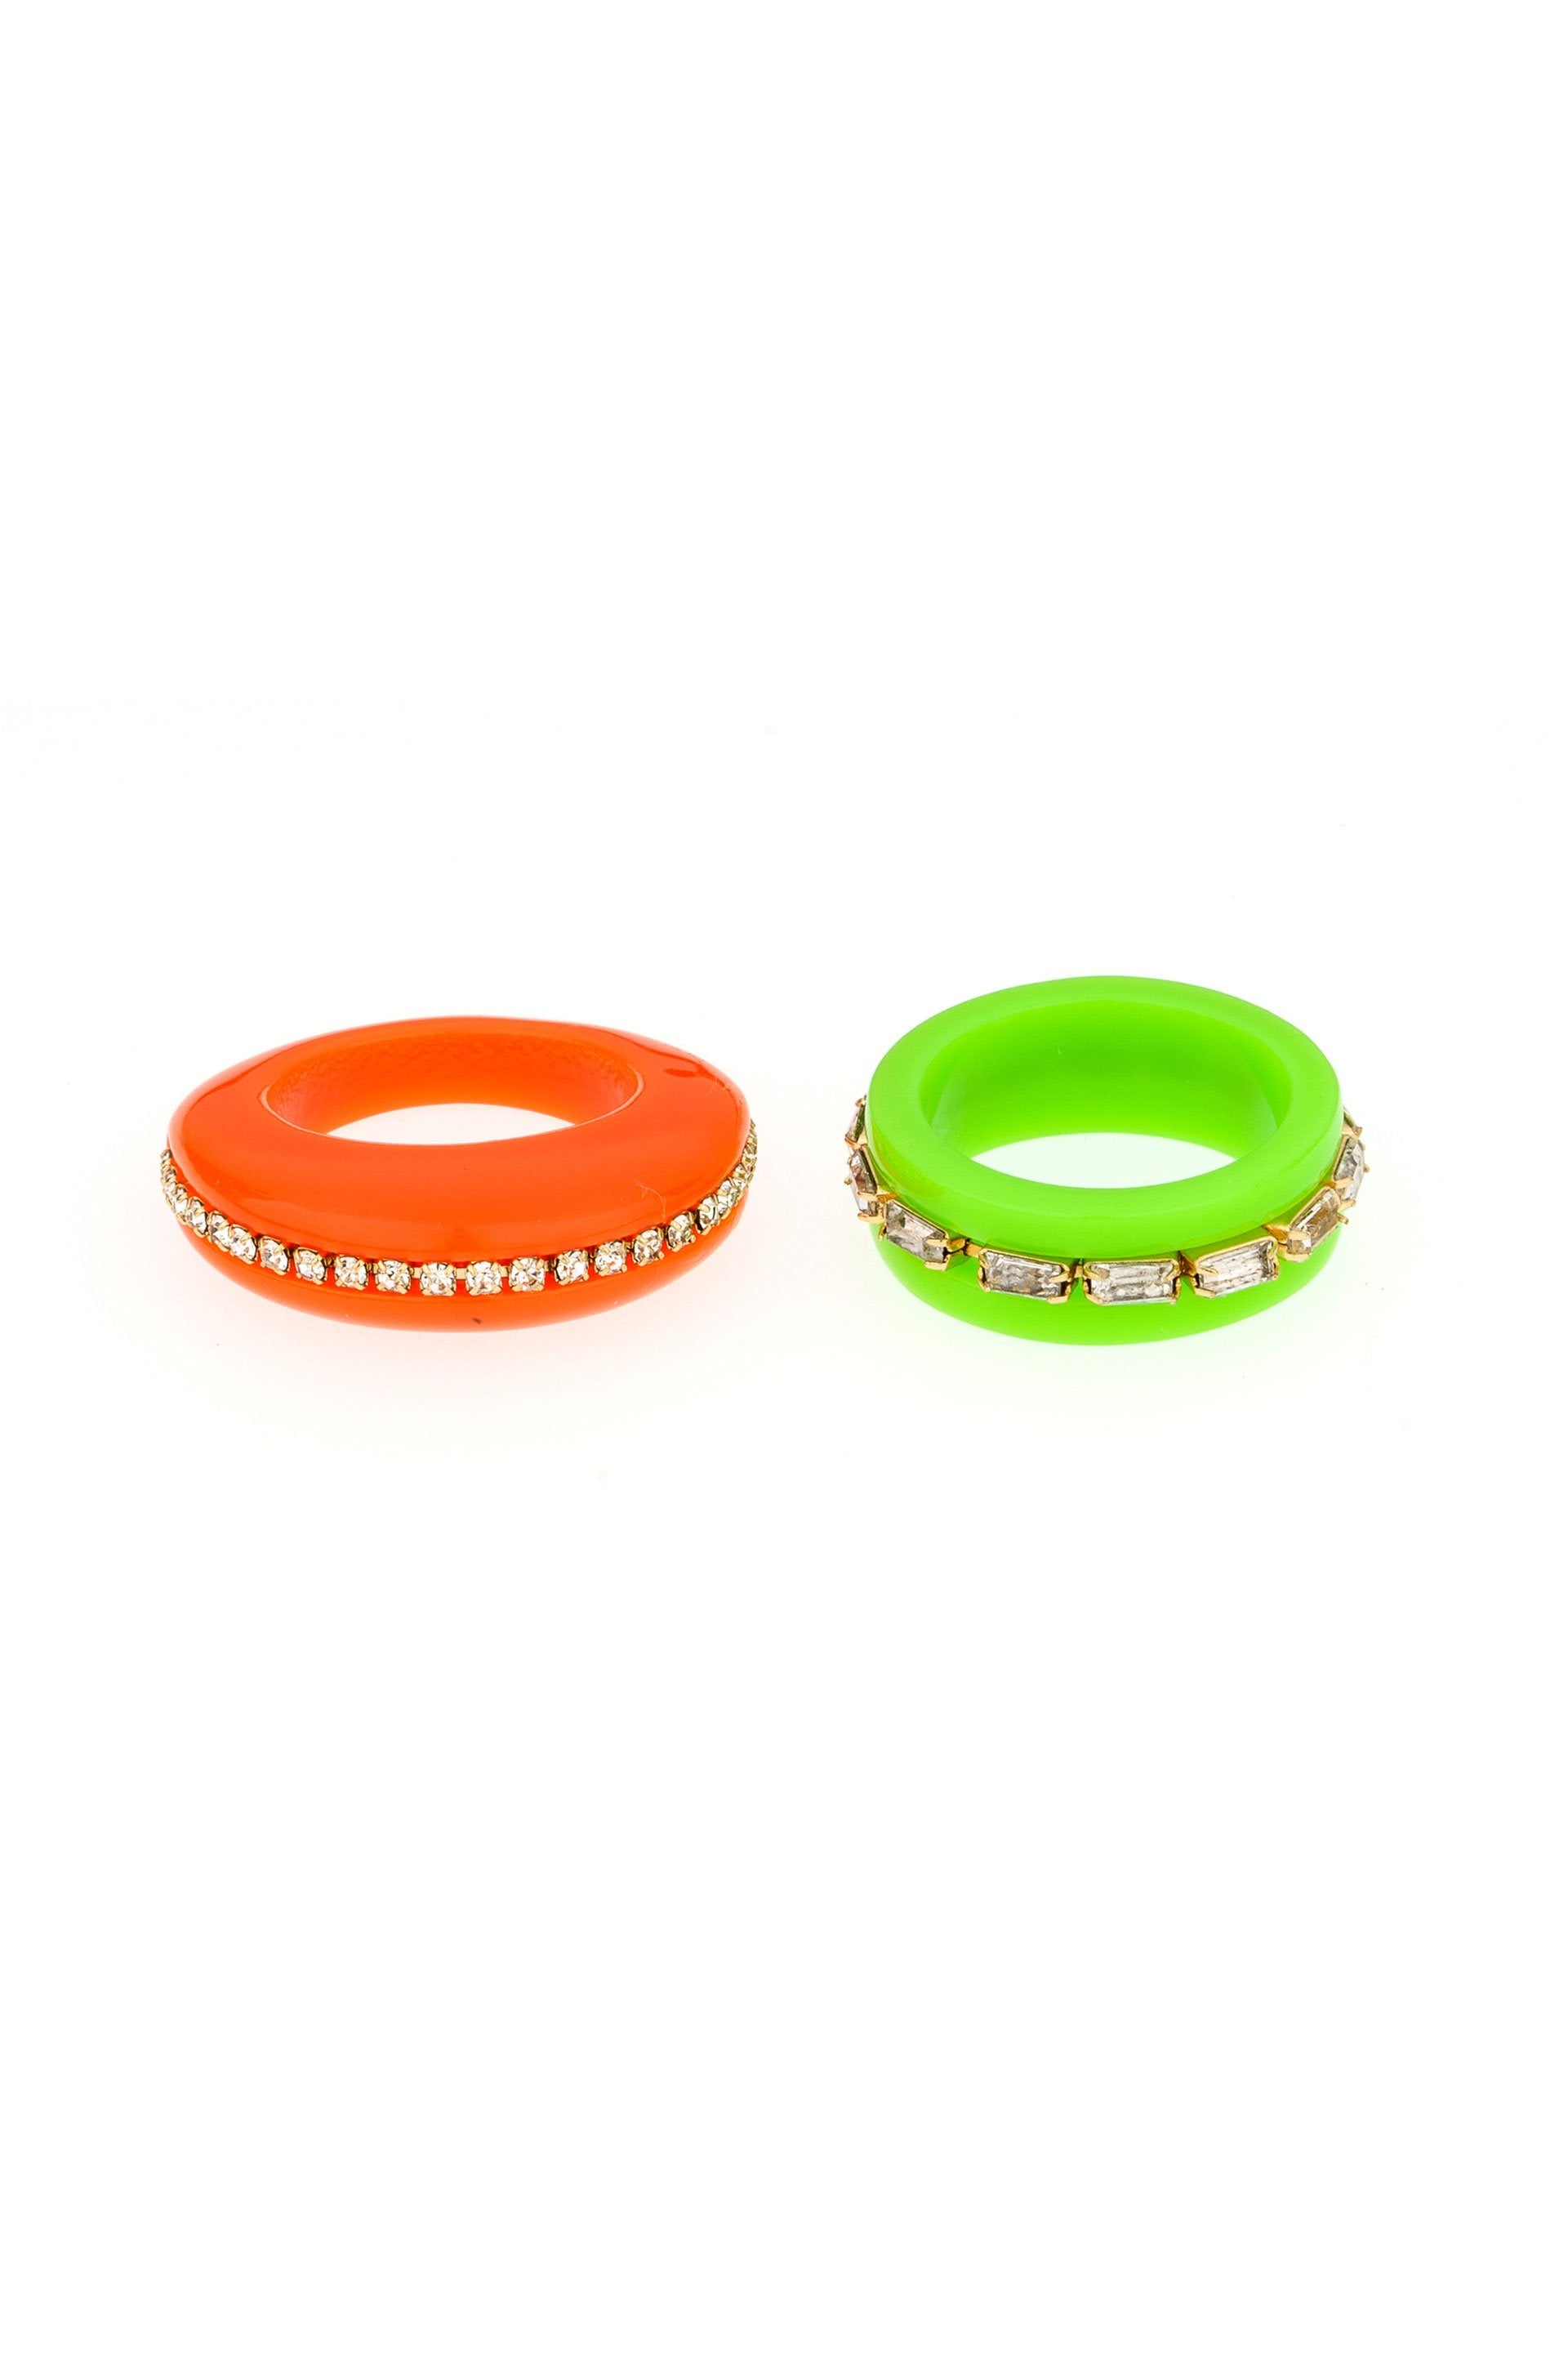 Neon Days Orange and Green Resin Ring Set on white